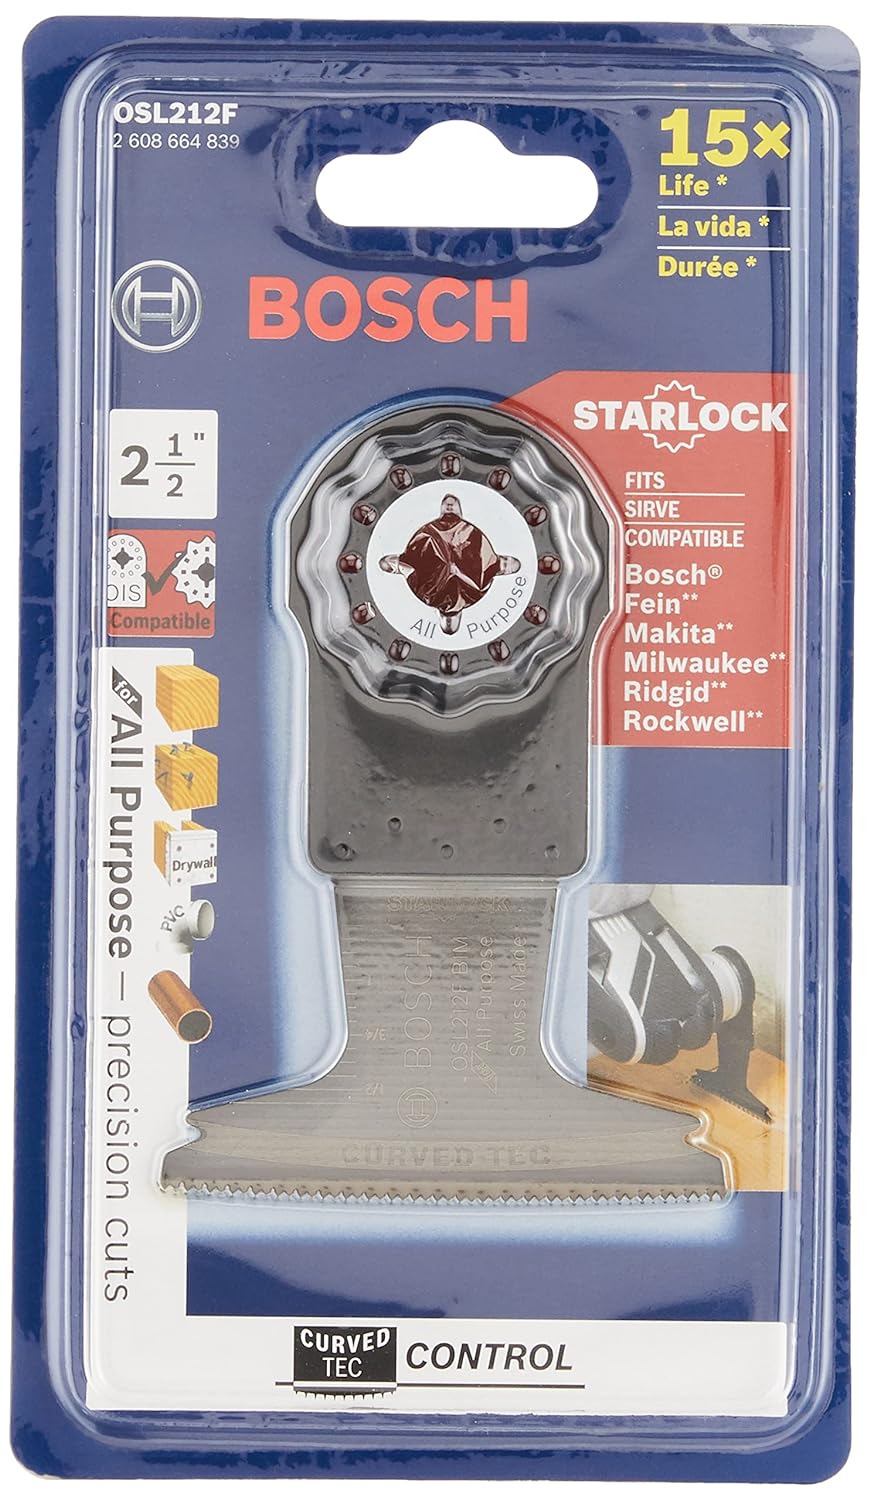 BOSCH OSL212F Swiss Made 1-Piece 2-1/2 In. Starlock Oscillating Multi Tool All Purpose Bi-Metal Plunge ($8.25 w/ Free Prime Ship from MP seller ThrHardwareSource) - $8.25